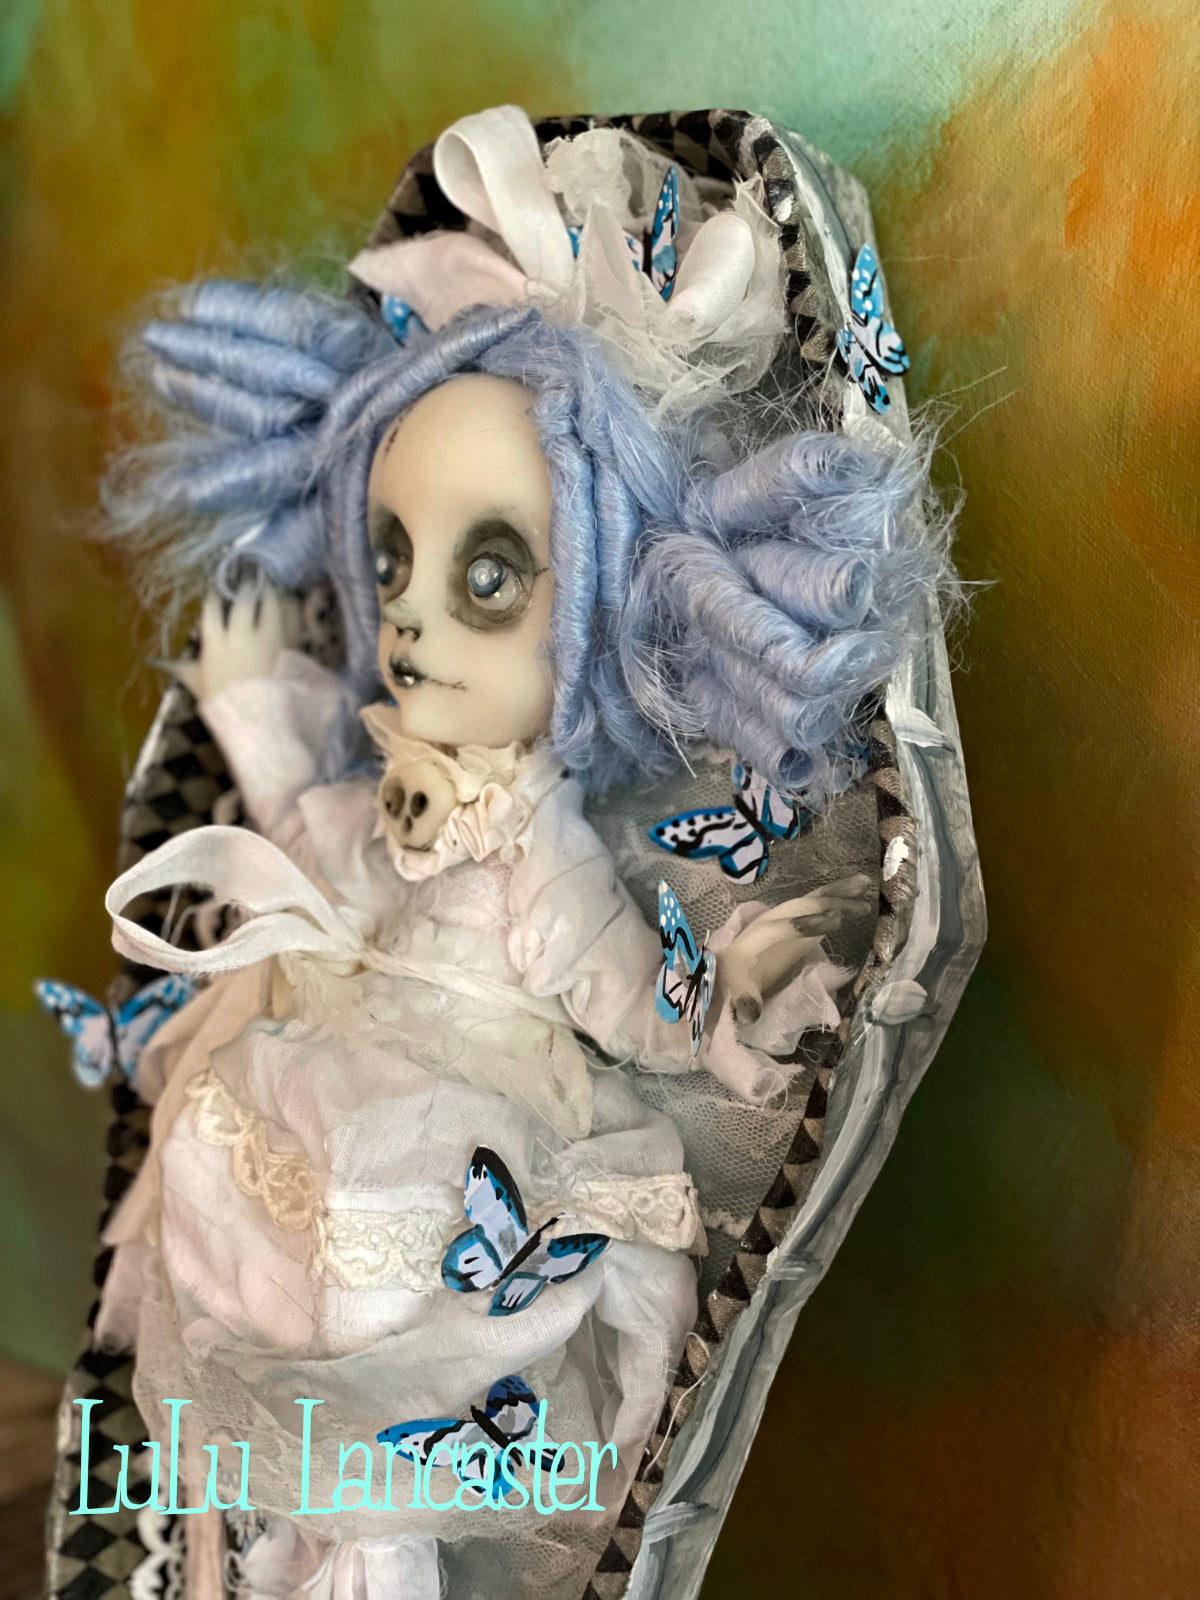 Little Emily corpse Halloween hanging coffin box Original LuLu Lancaster Art Doll